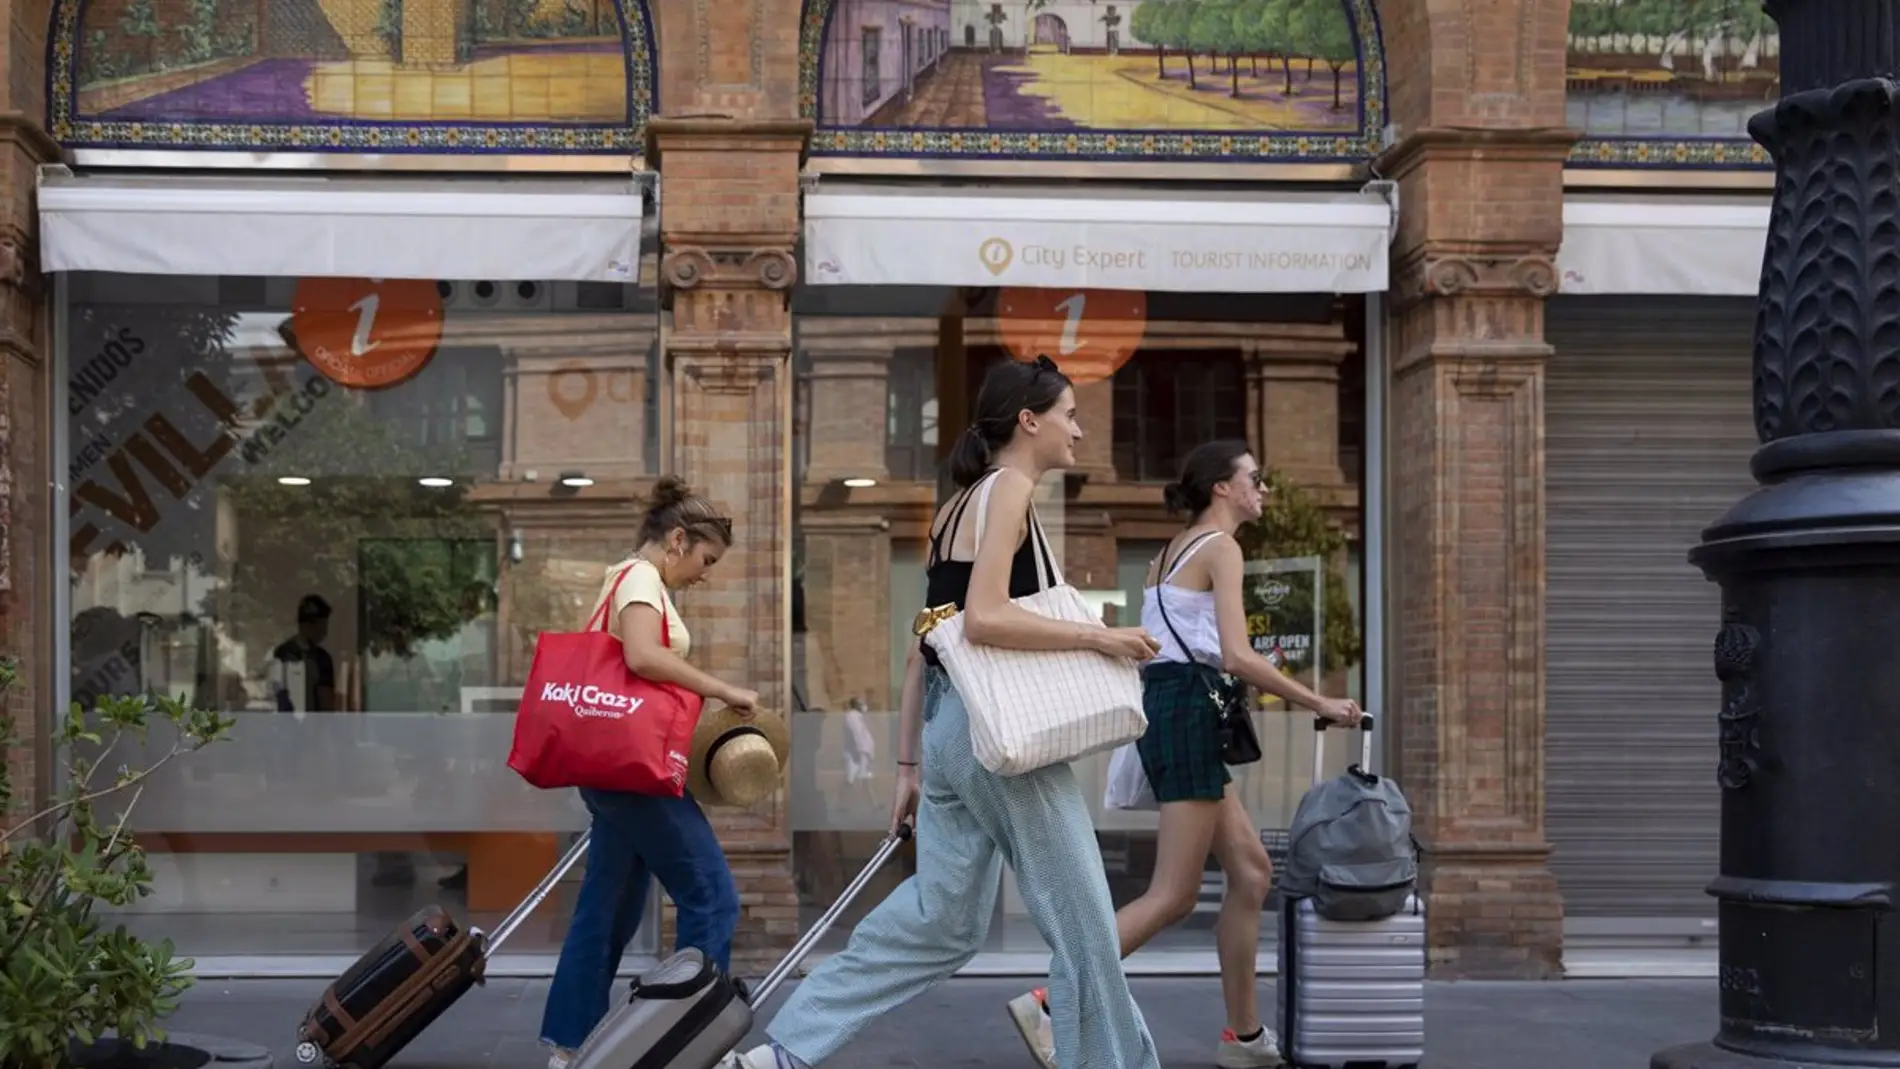 Turistas pasean por las calles céntricas de Sevilla